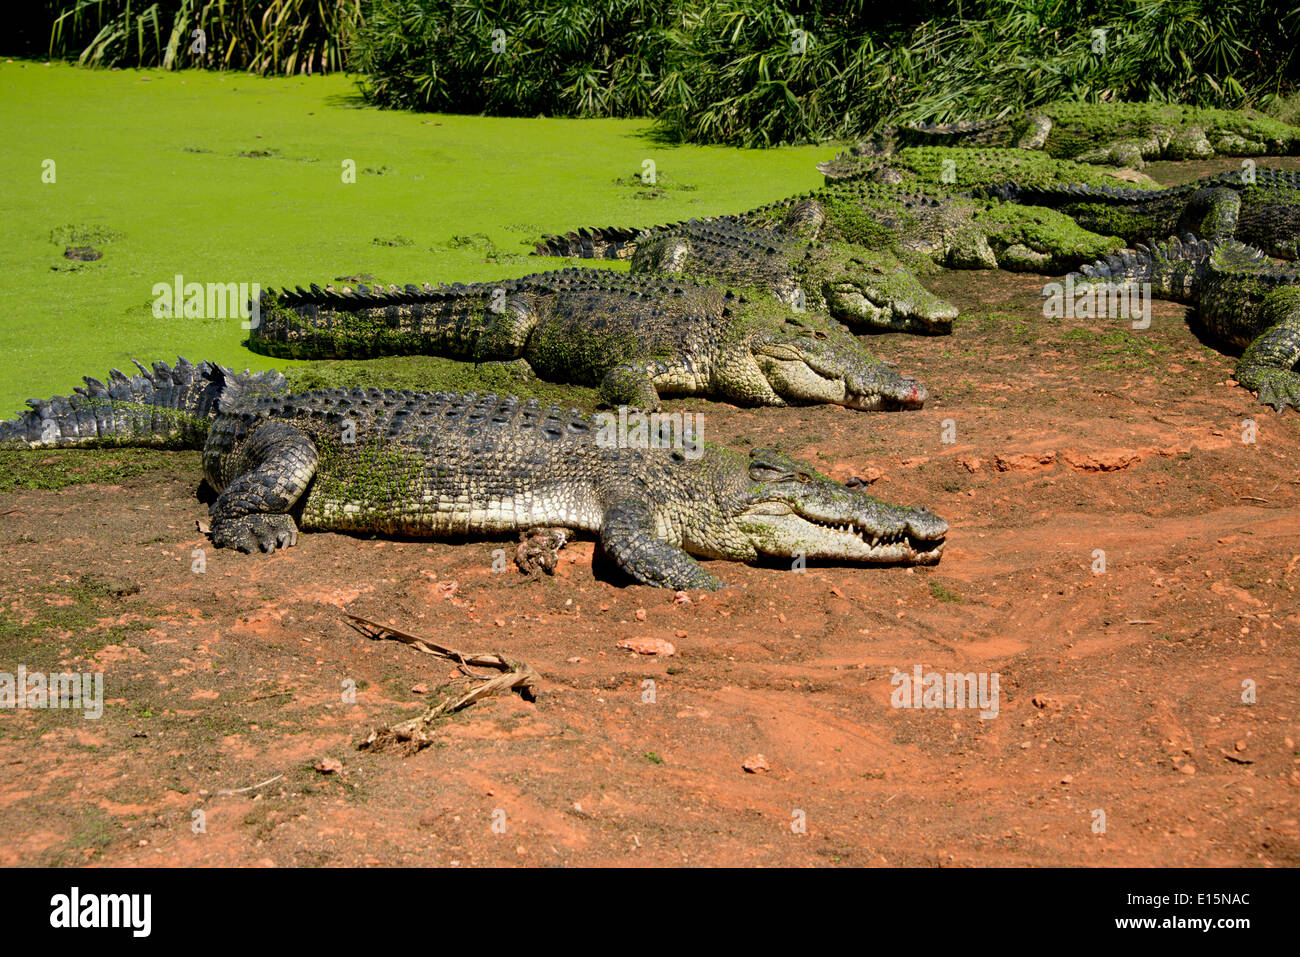 Australia, Western Australia, Broome. Malcolm Douglas Crocodile Park. Saltwater crocodile (Captive: Crocodylus porosus). Stock Photo